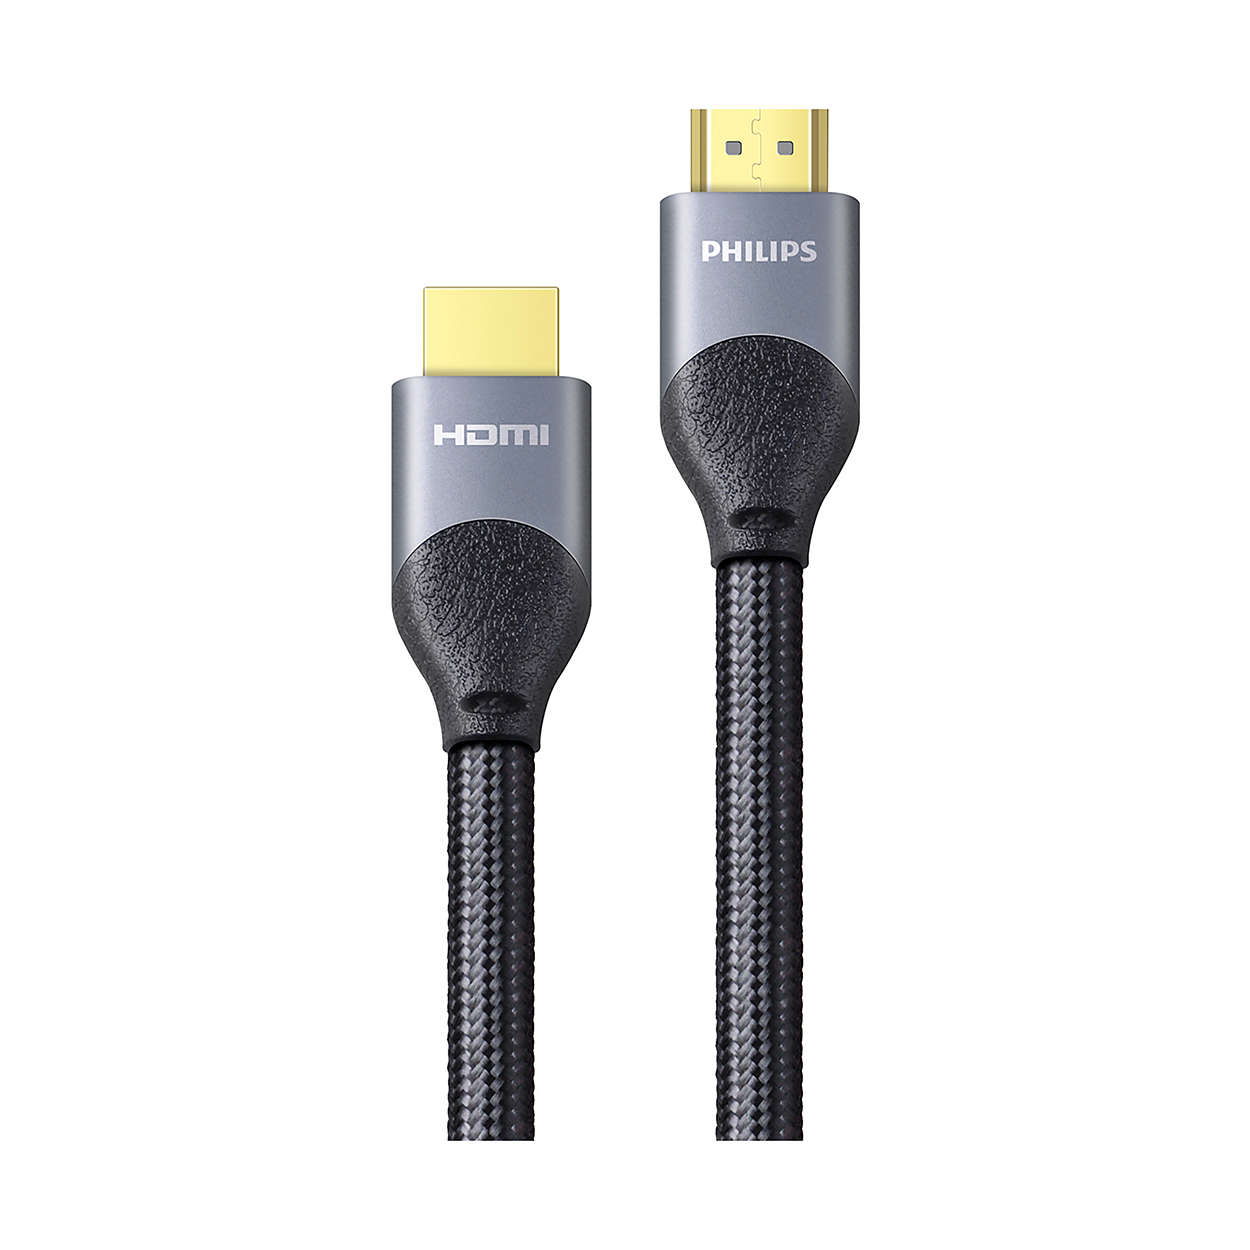 HDMI Preminum Certified Cable